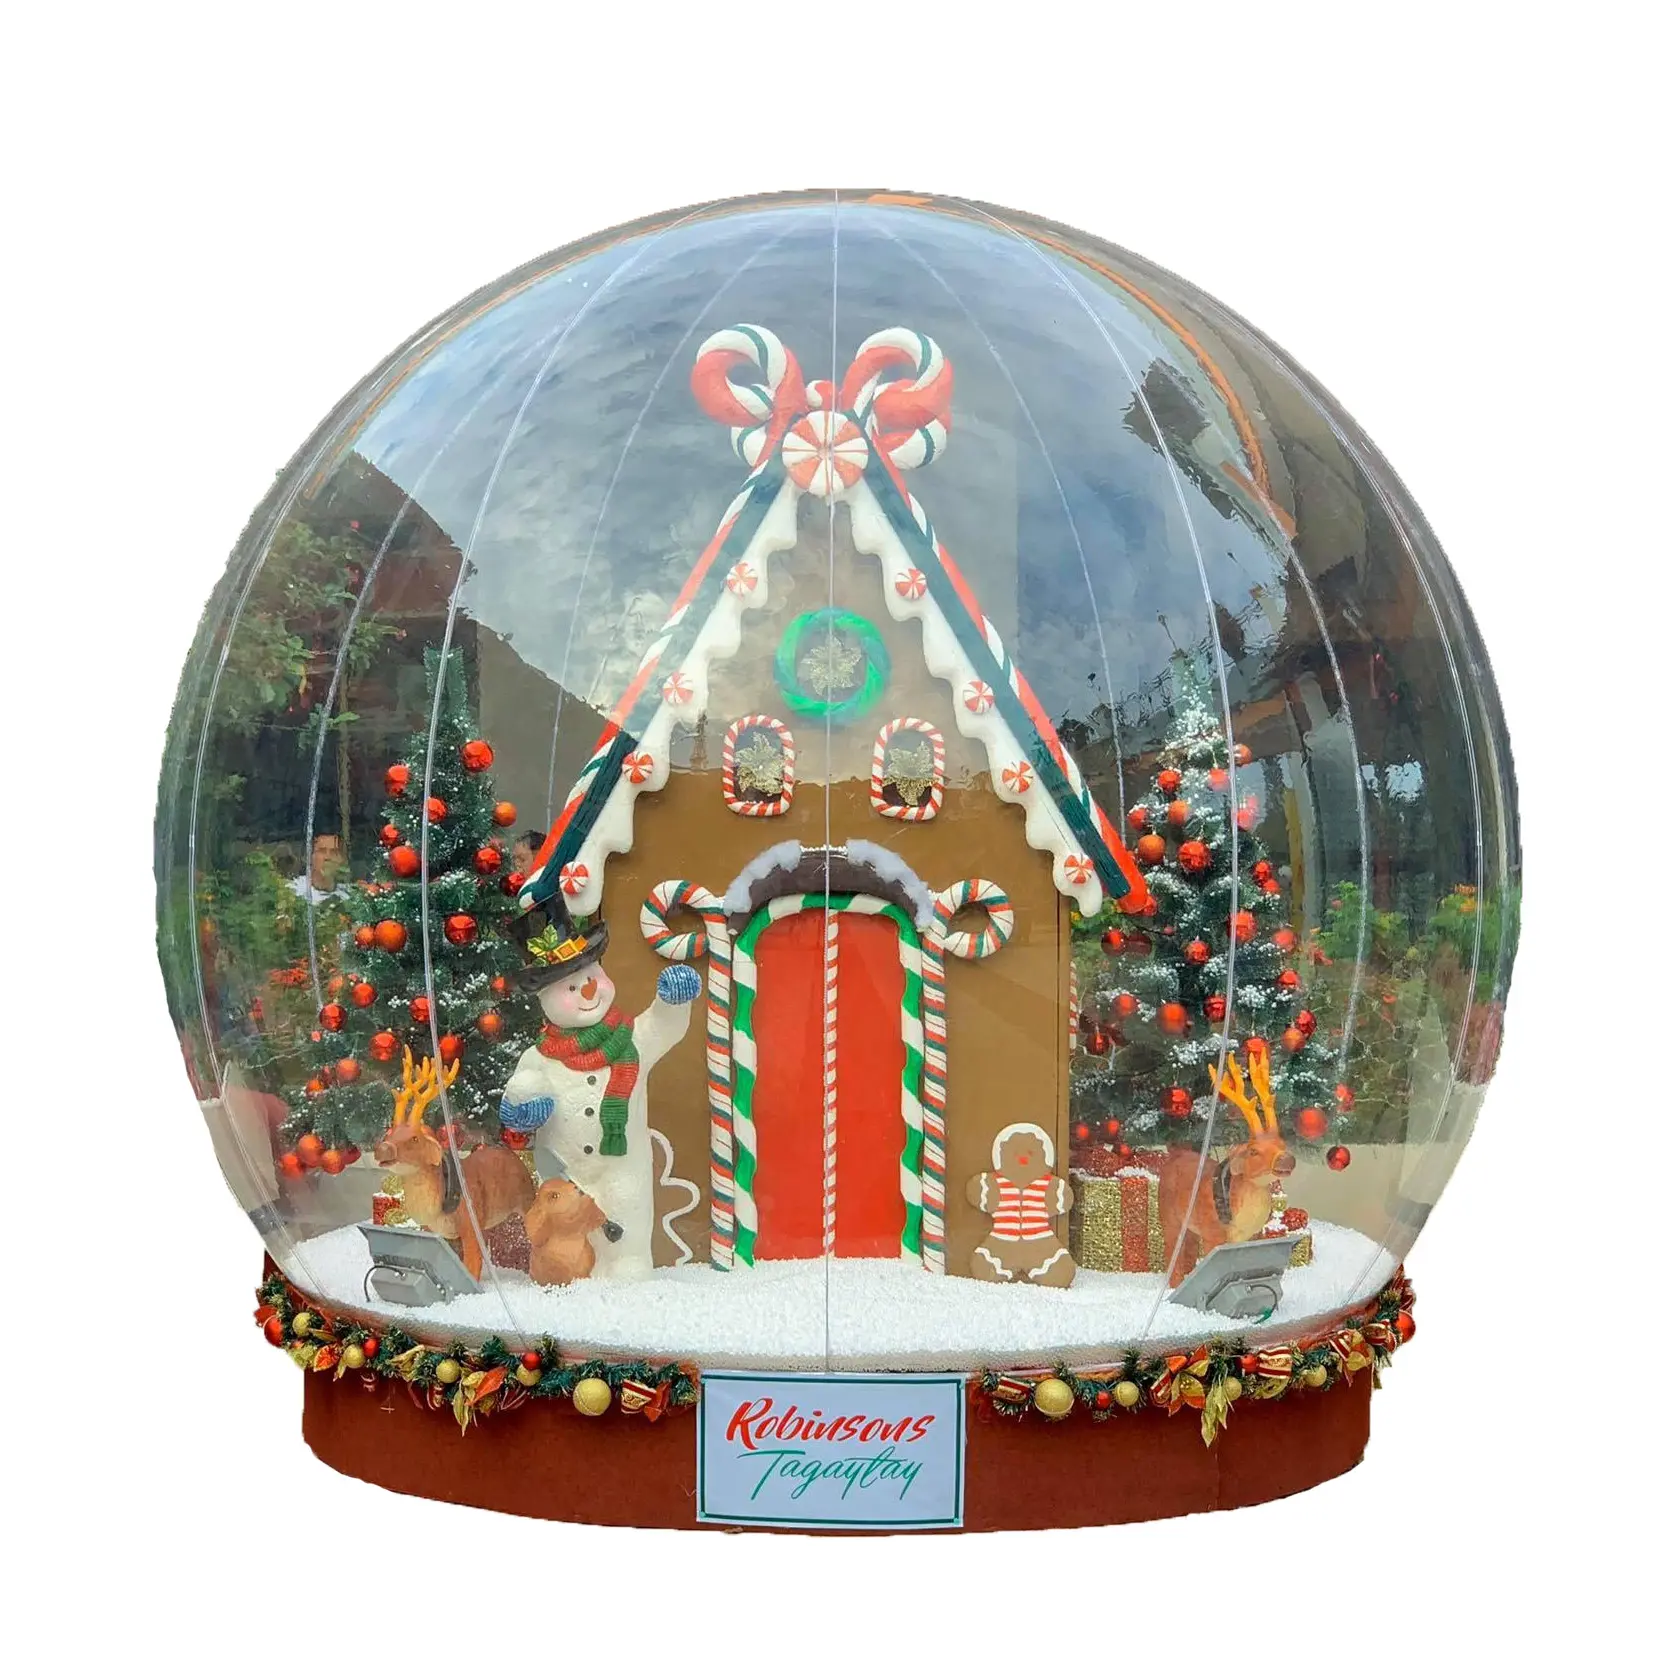 Aero-globo inflable gigante transparente para nieve, Bola de burbuja para publicidad, decoración de Navidad, bola de nieve inflable personalizada, 5m